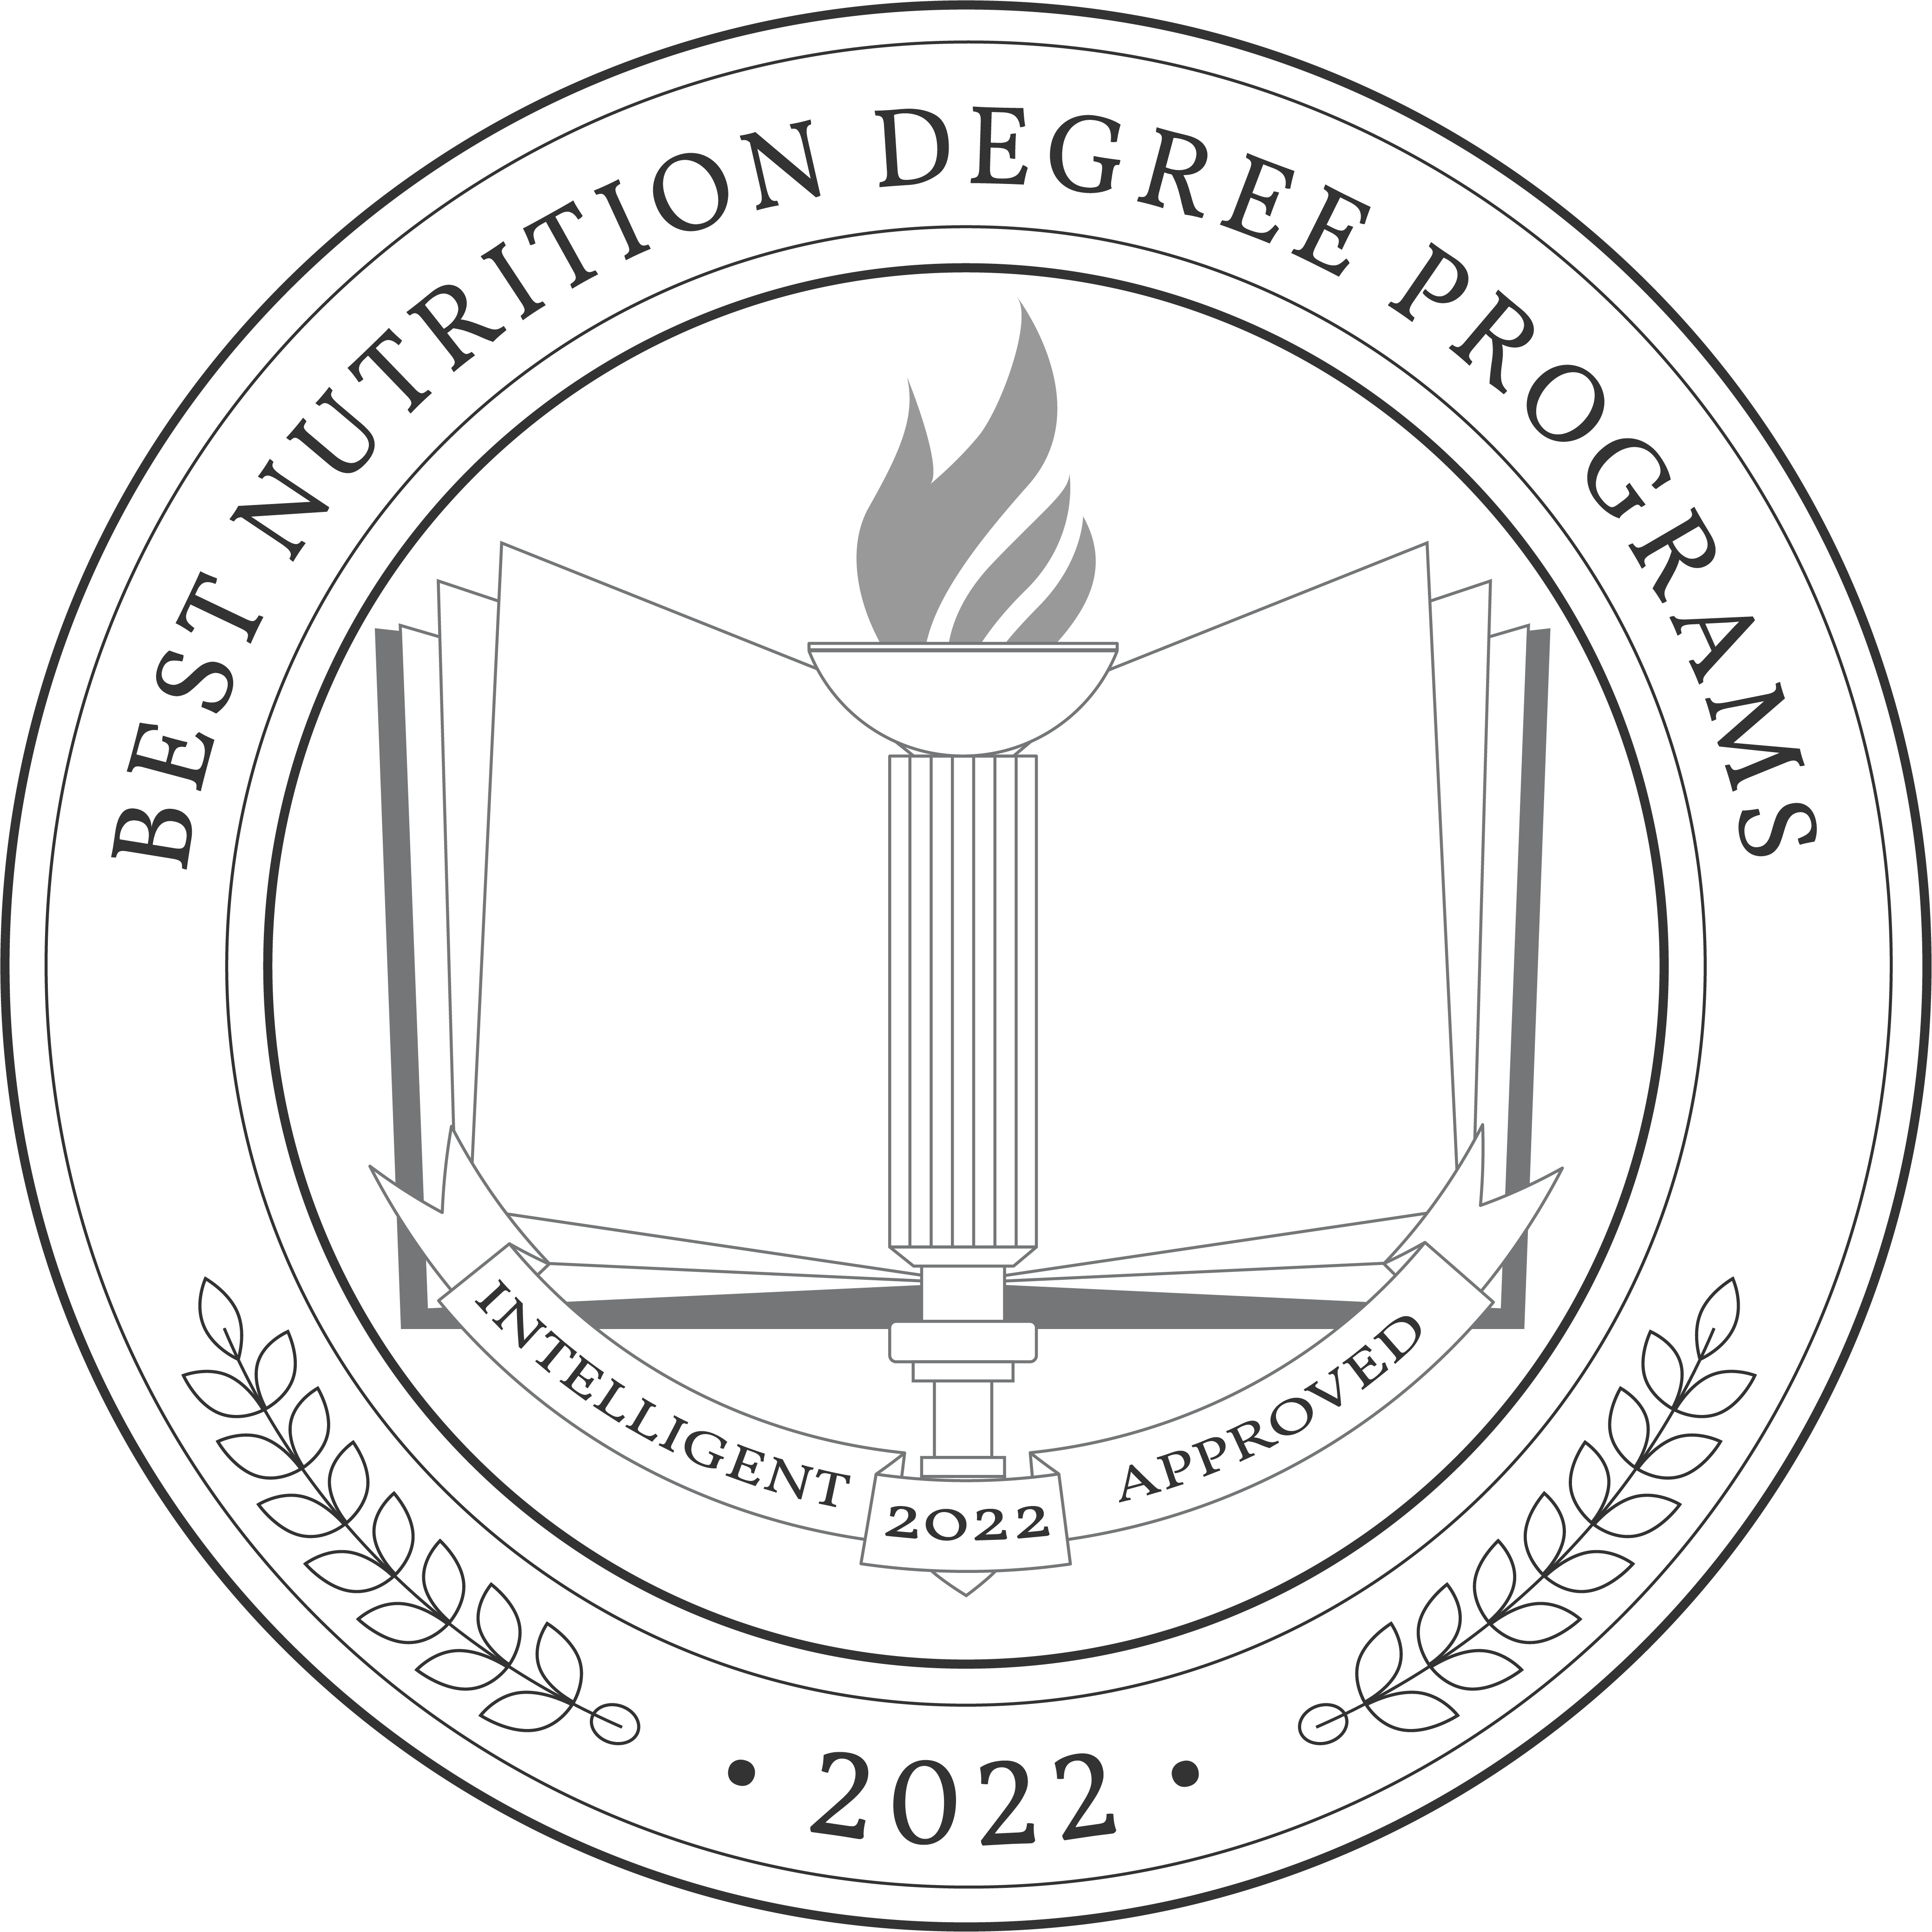 Best Nutrition Degree Programs